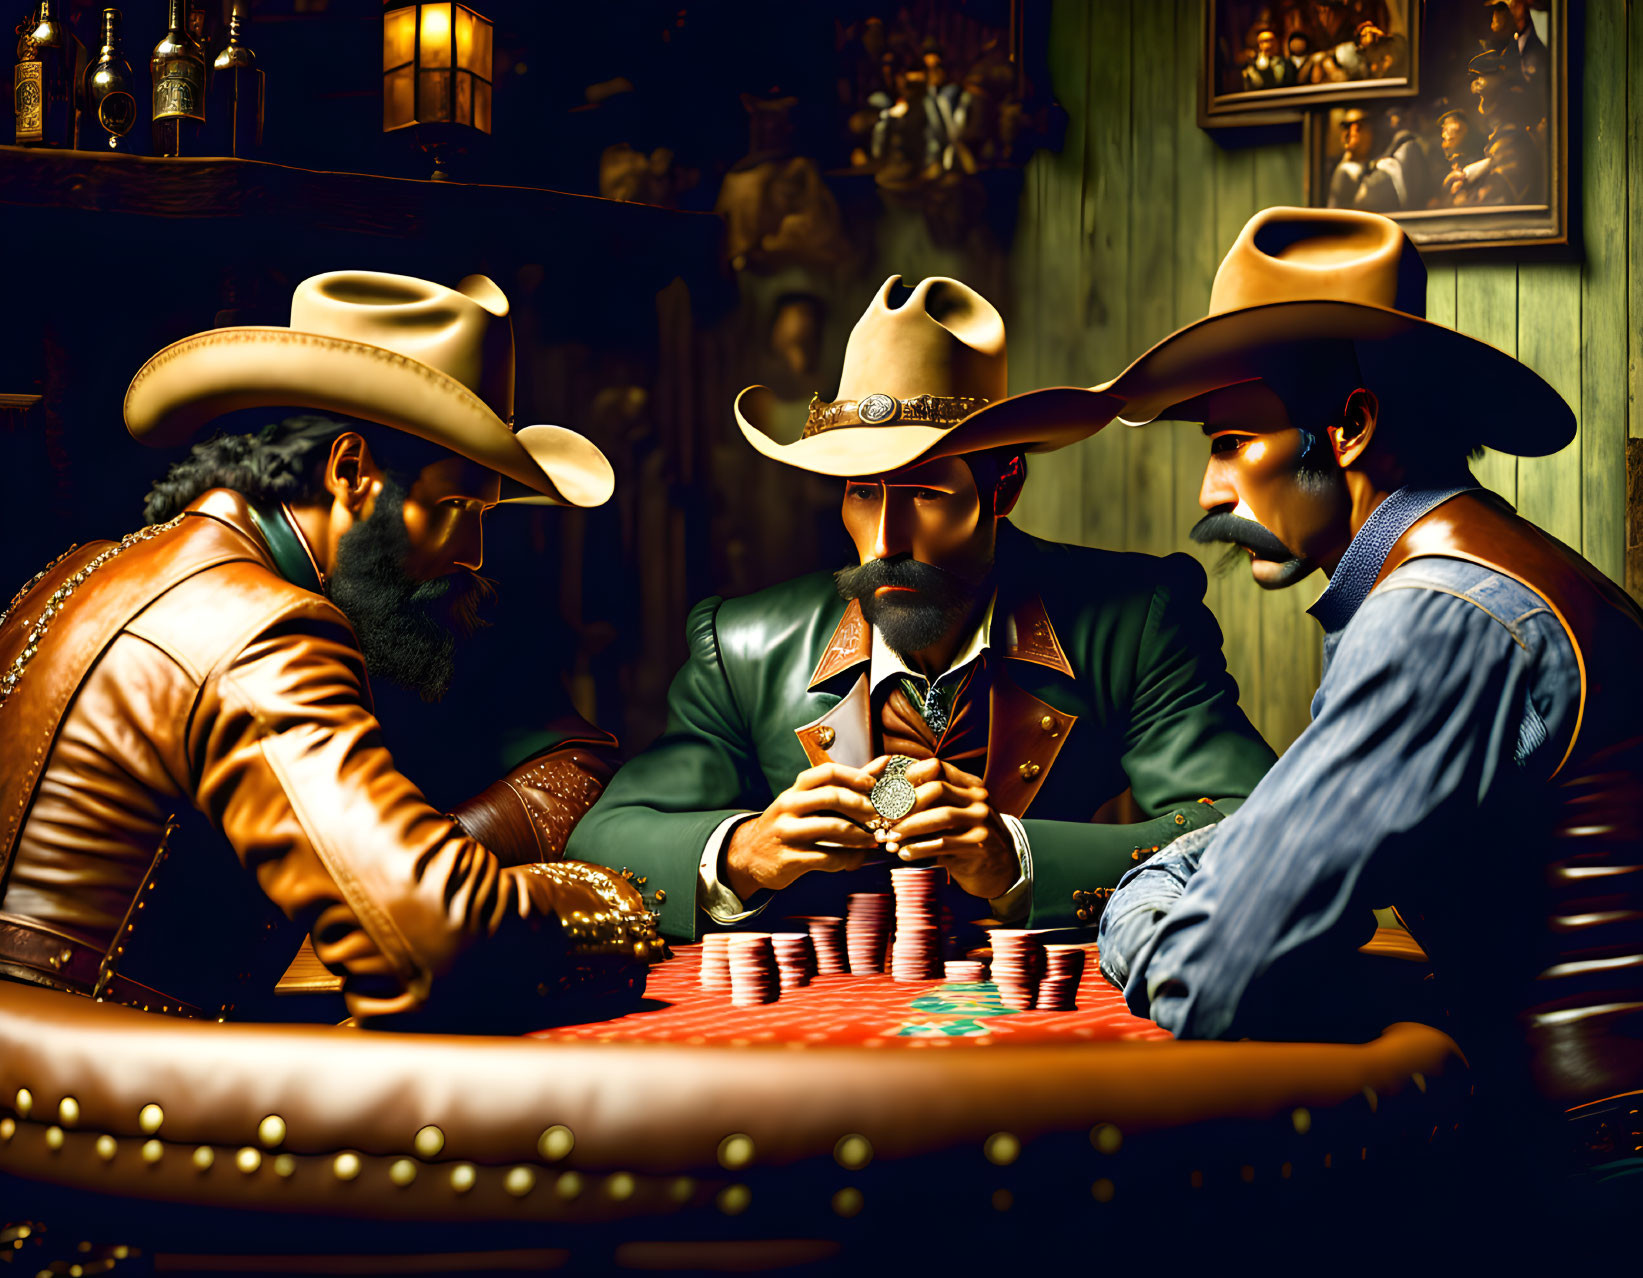 Cowboys playing poker in dimly lit saloon scene.